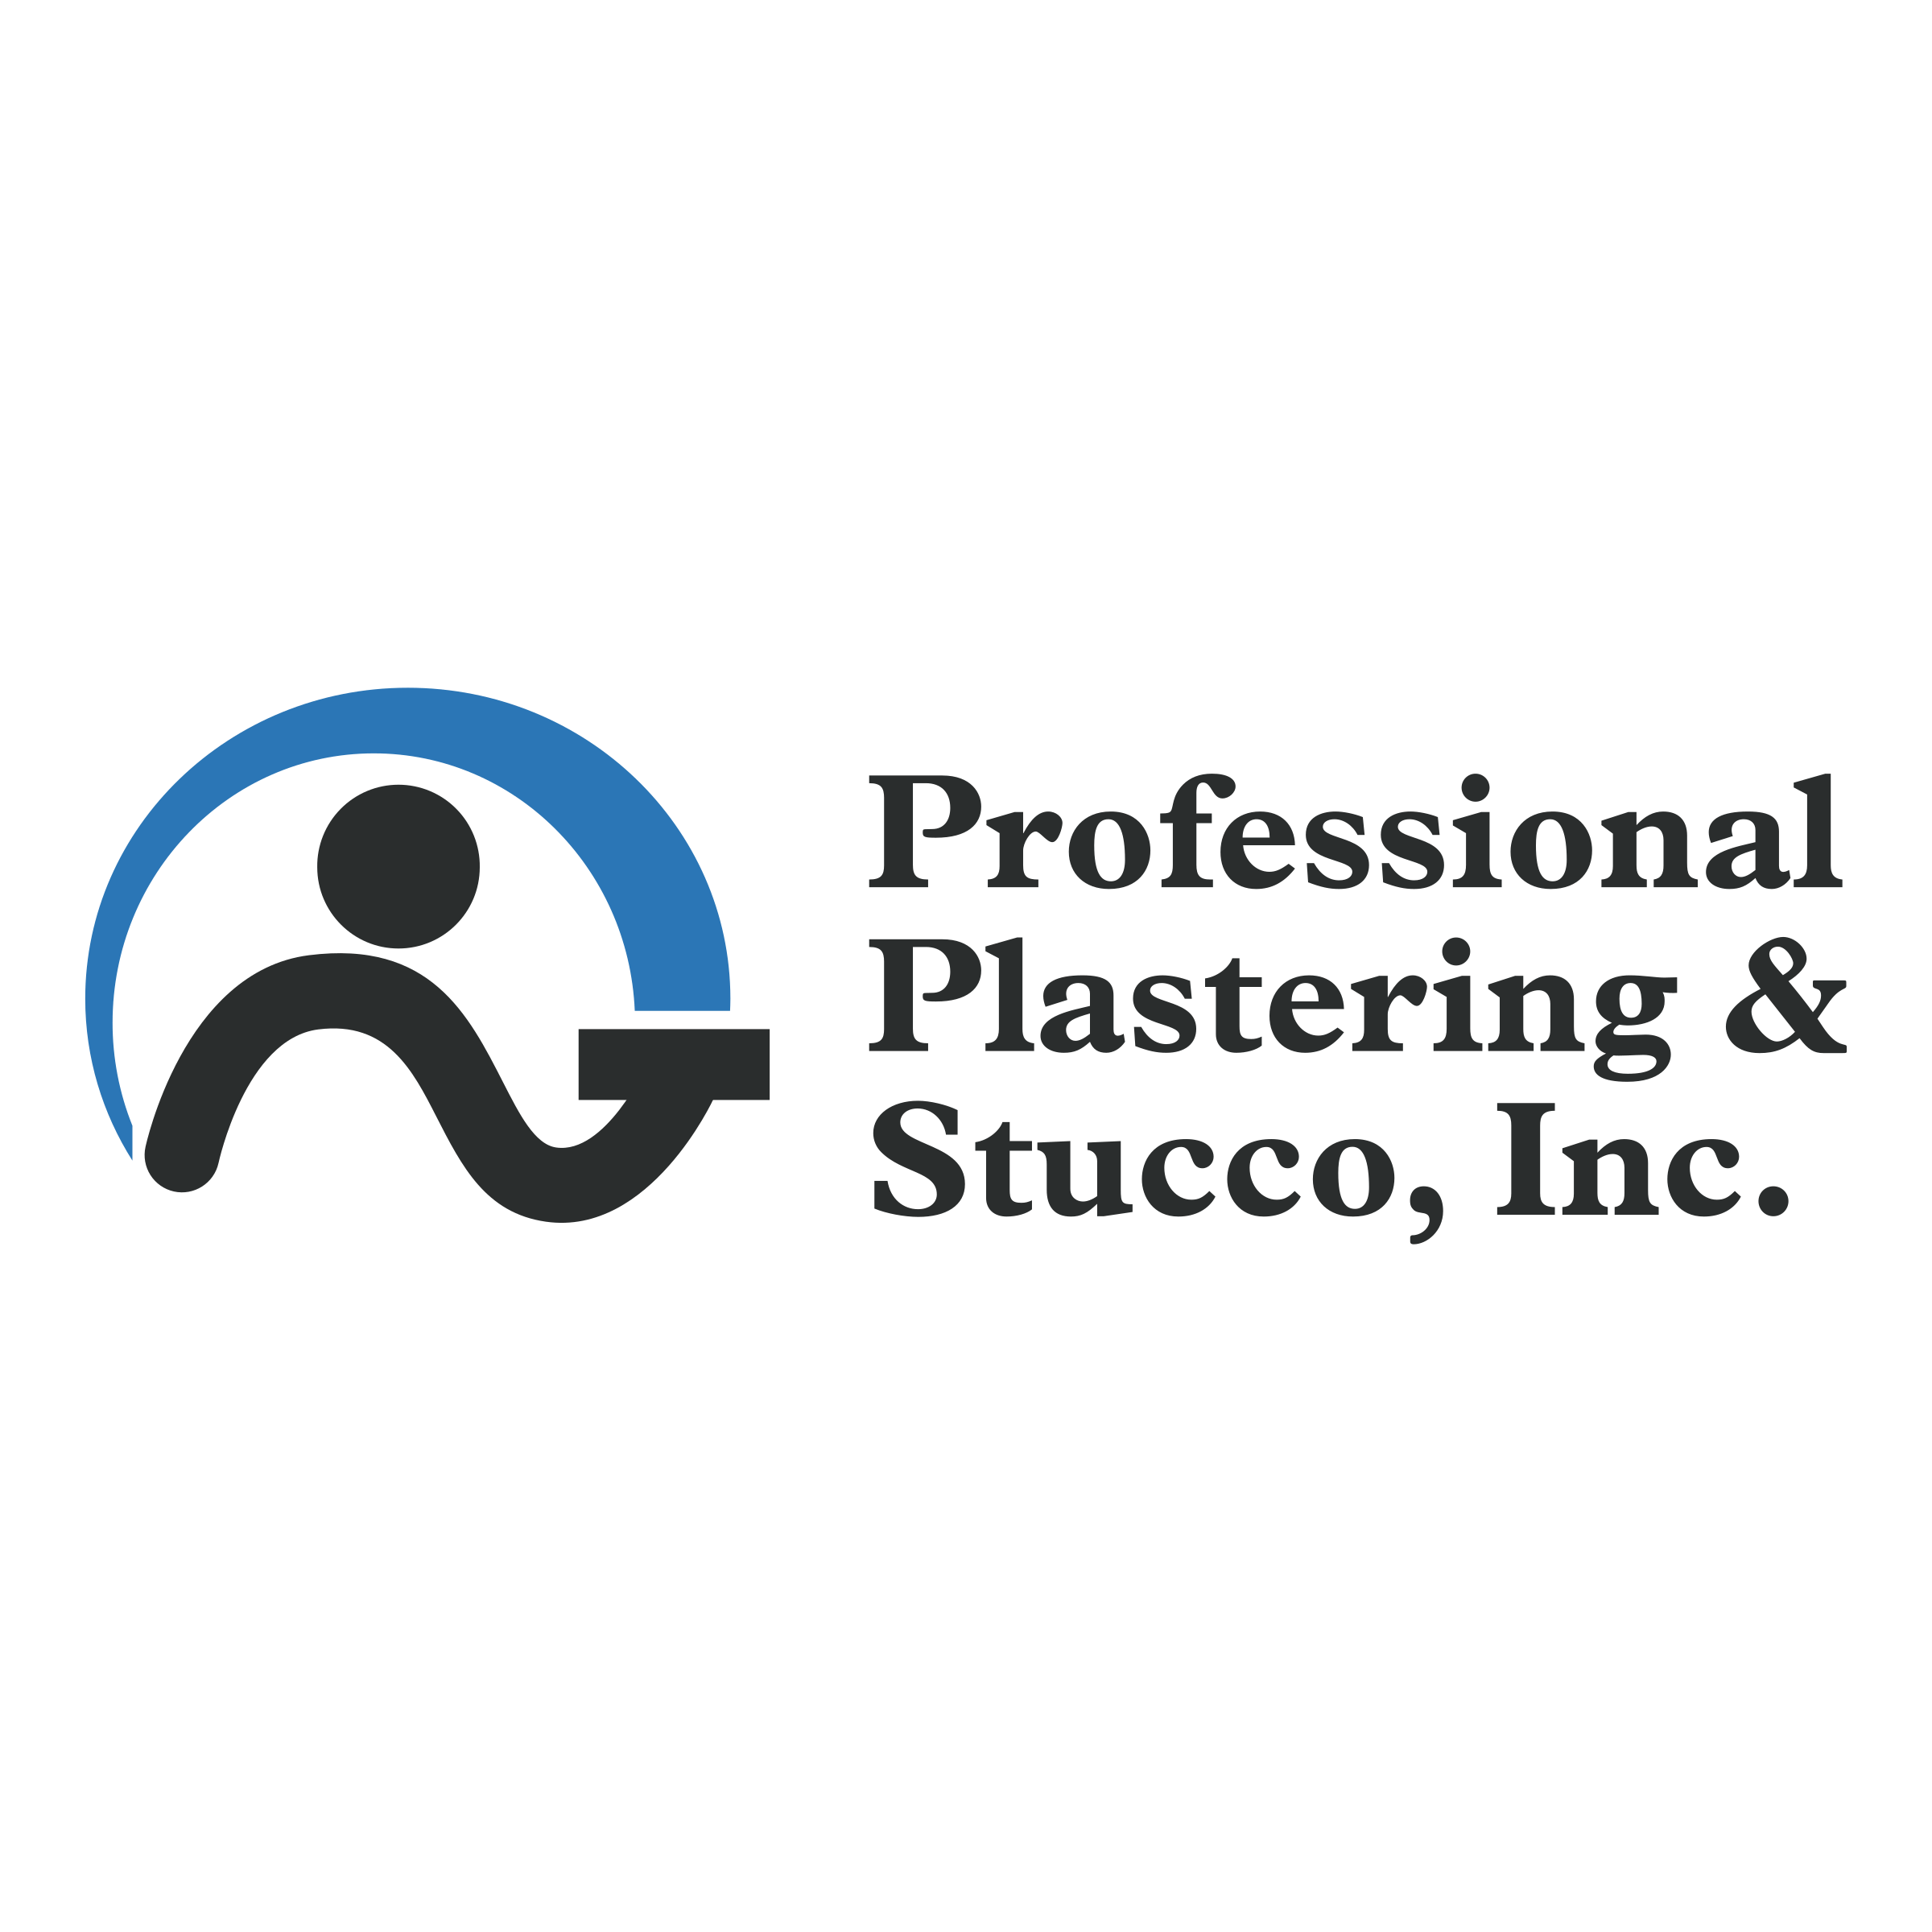 Stucco Logo - Professional Plastering & Stucco Logo PNG Transparent & SVG Vector